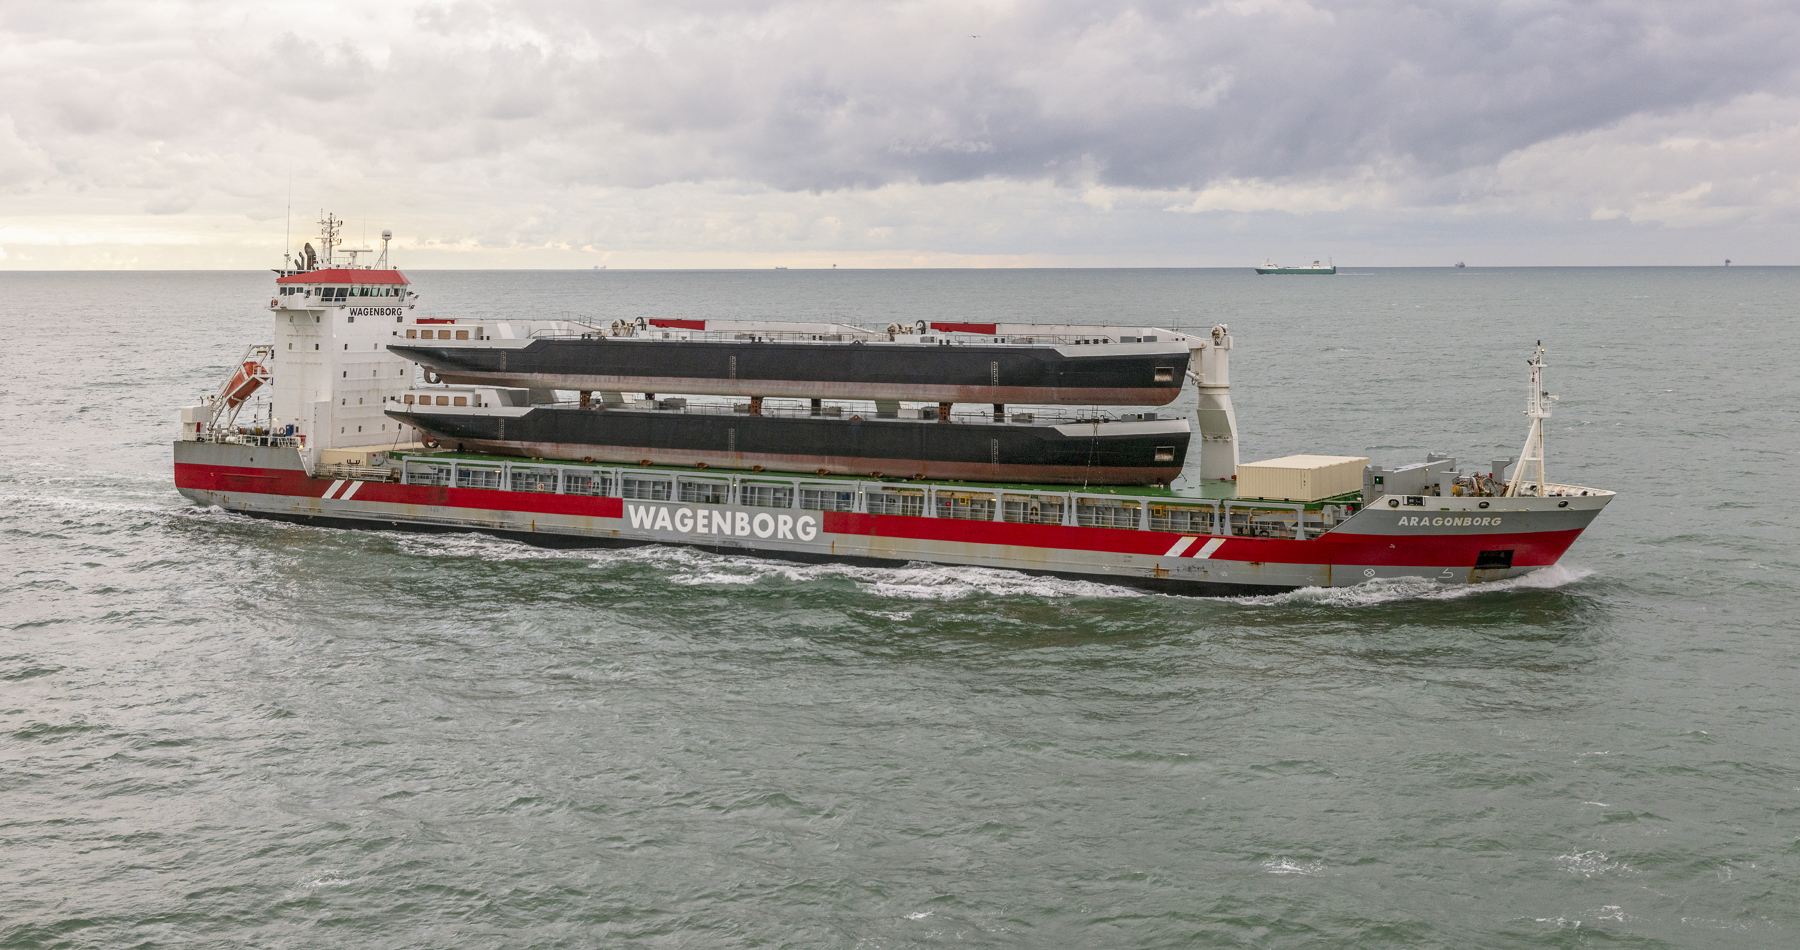 MV Aragonborg ships project cargo to Rotterdam